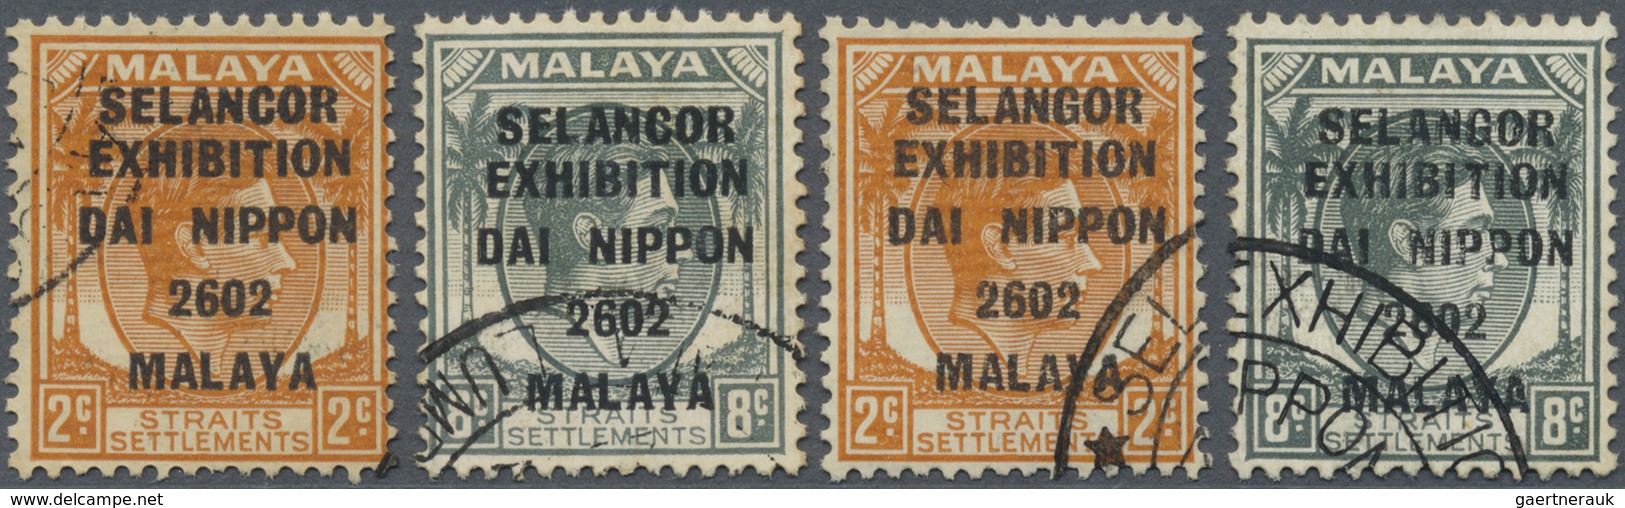 O Malaiische Staaten - Selangor: Japanese Occupation, 1942, Selangor Exhibition Set, Error "C" For "G" - Selangor